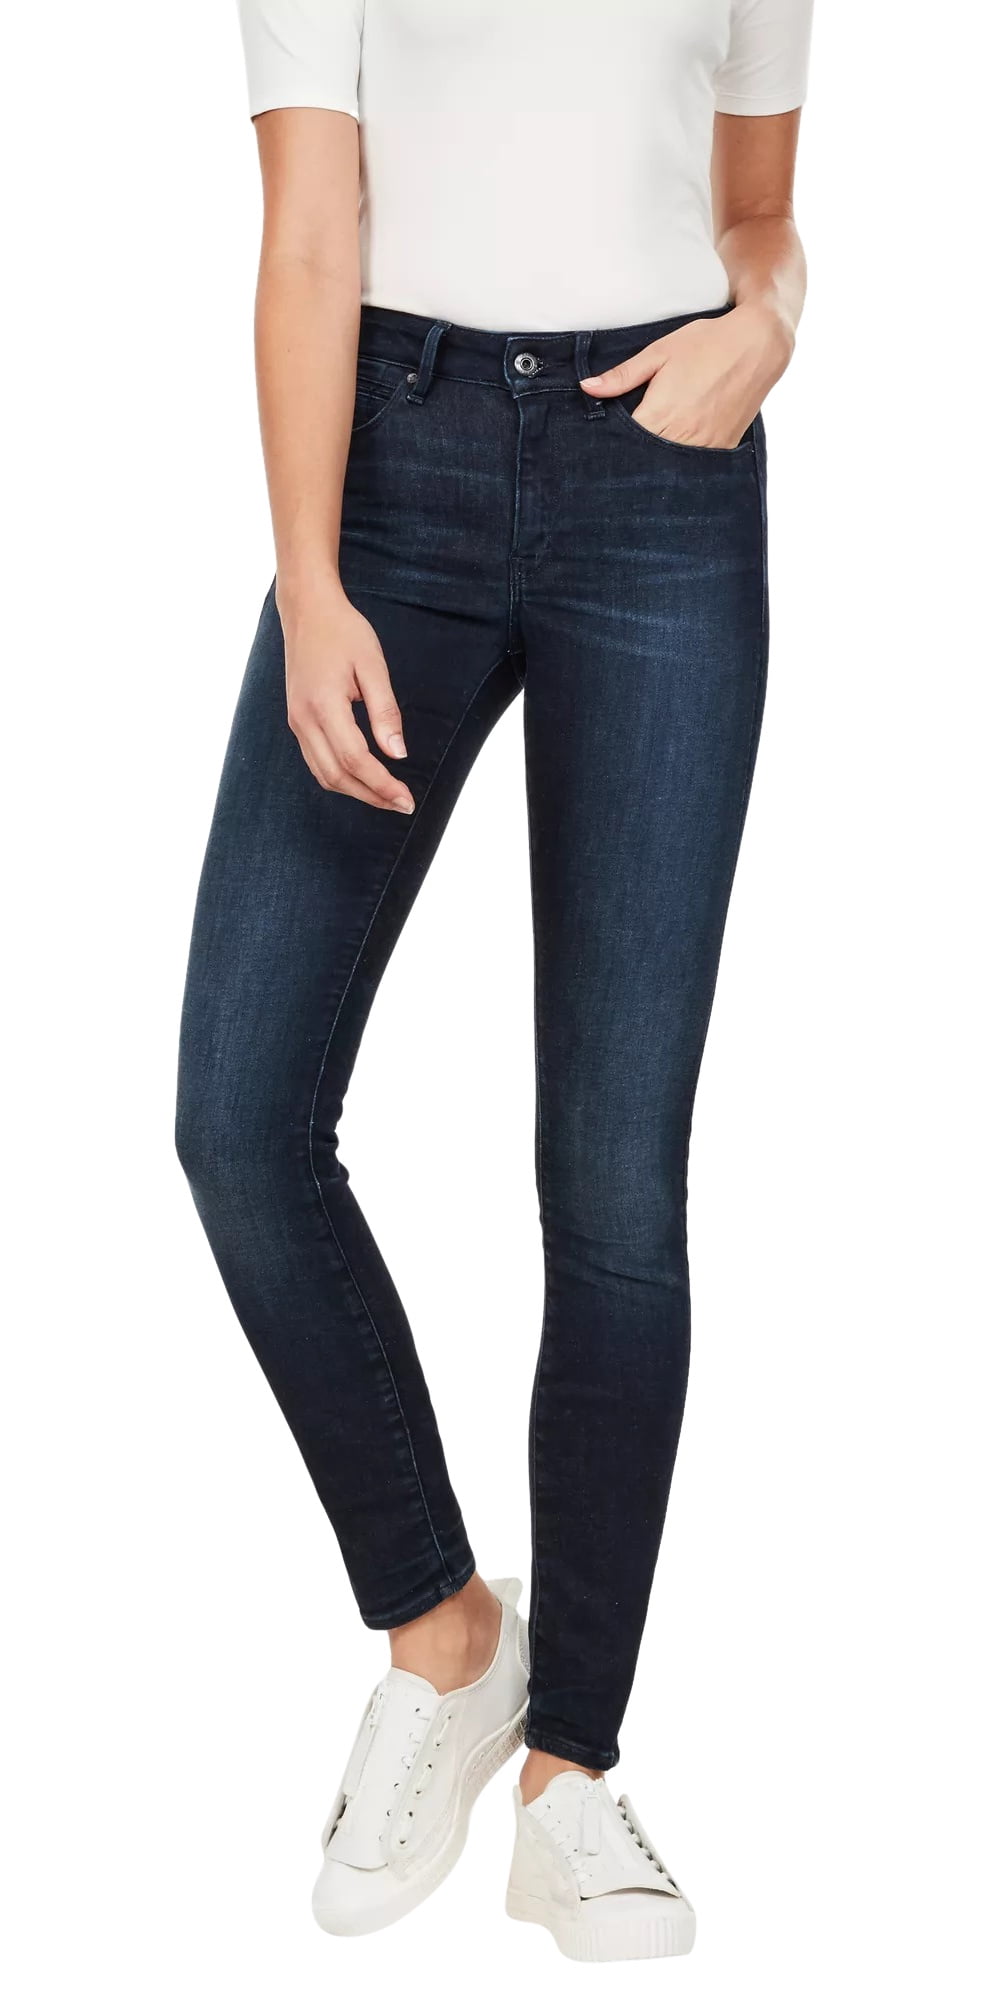 ONLY Womens Shape Jeans Blue in Size 33W 32L